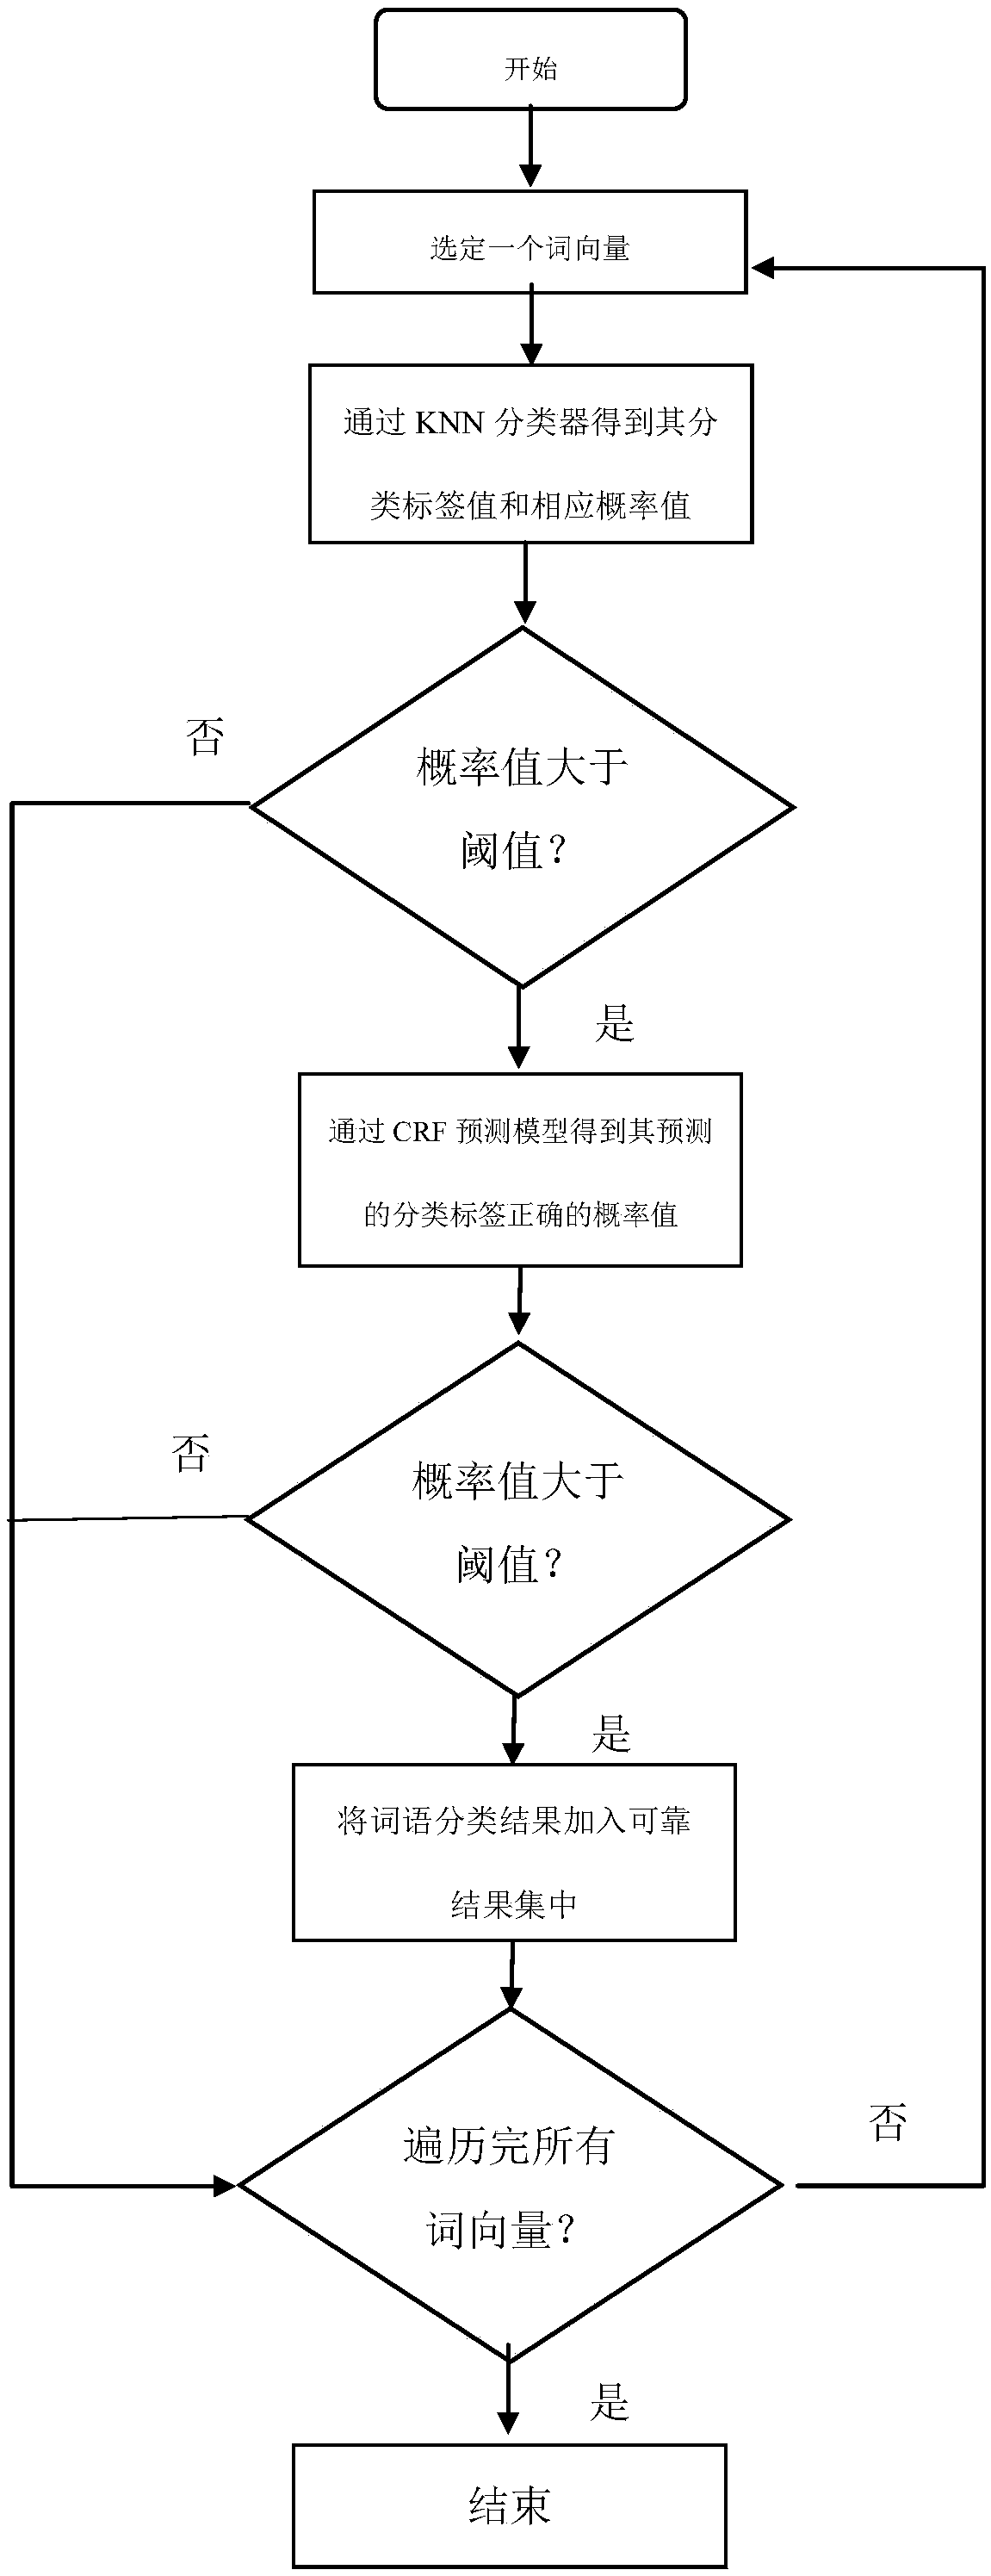 Open domain Chinese text naming entity identification method based on semi-supervised learning